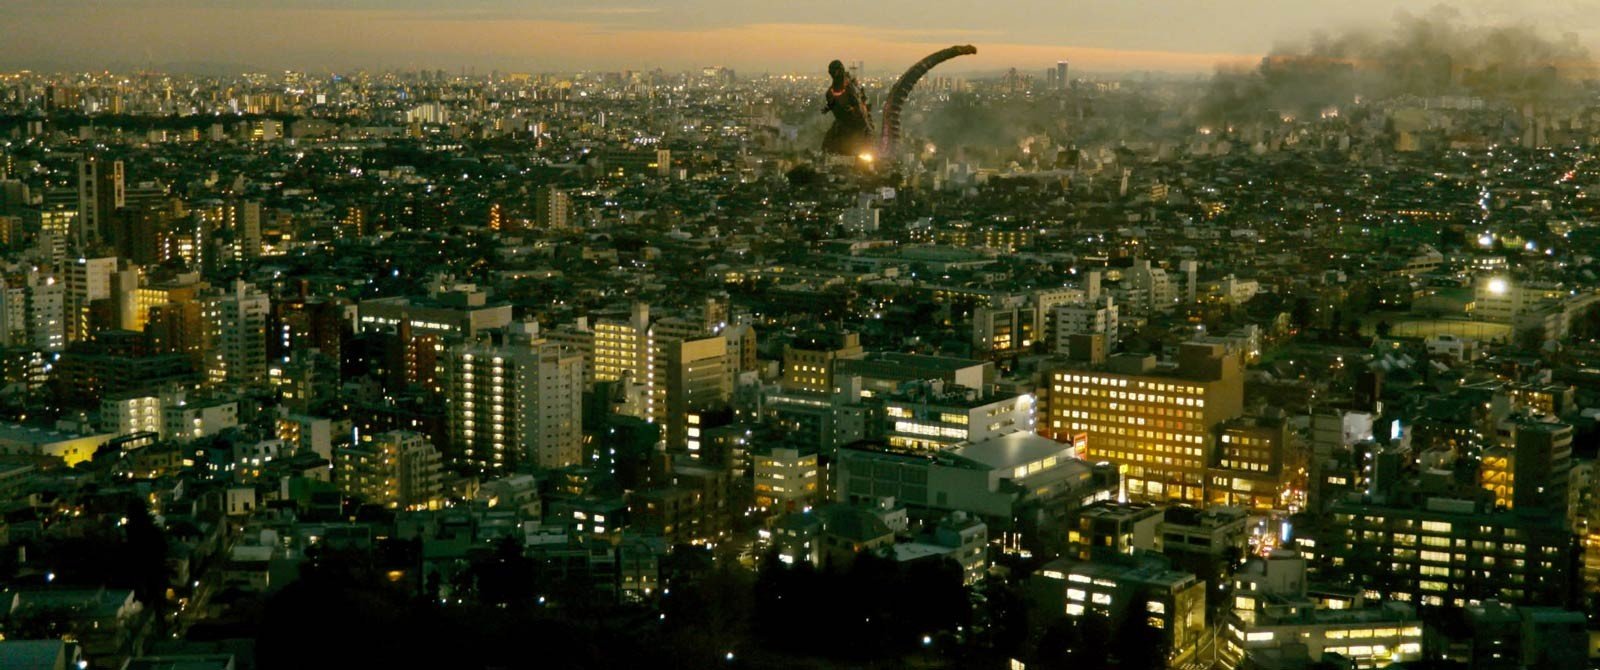 Shin Godzilla (blu-ray)